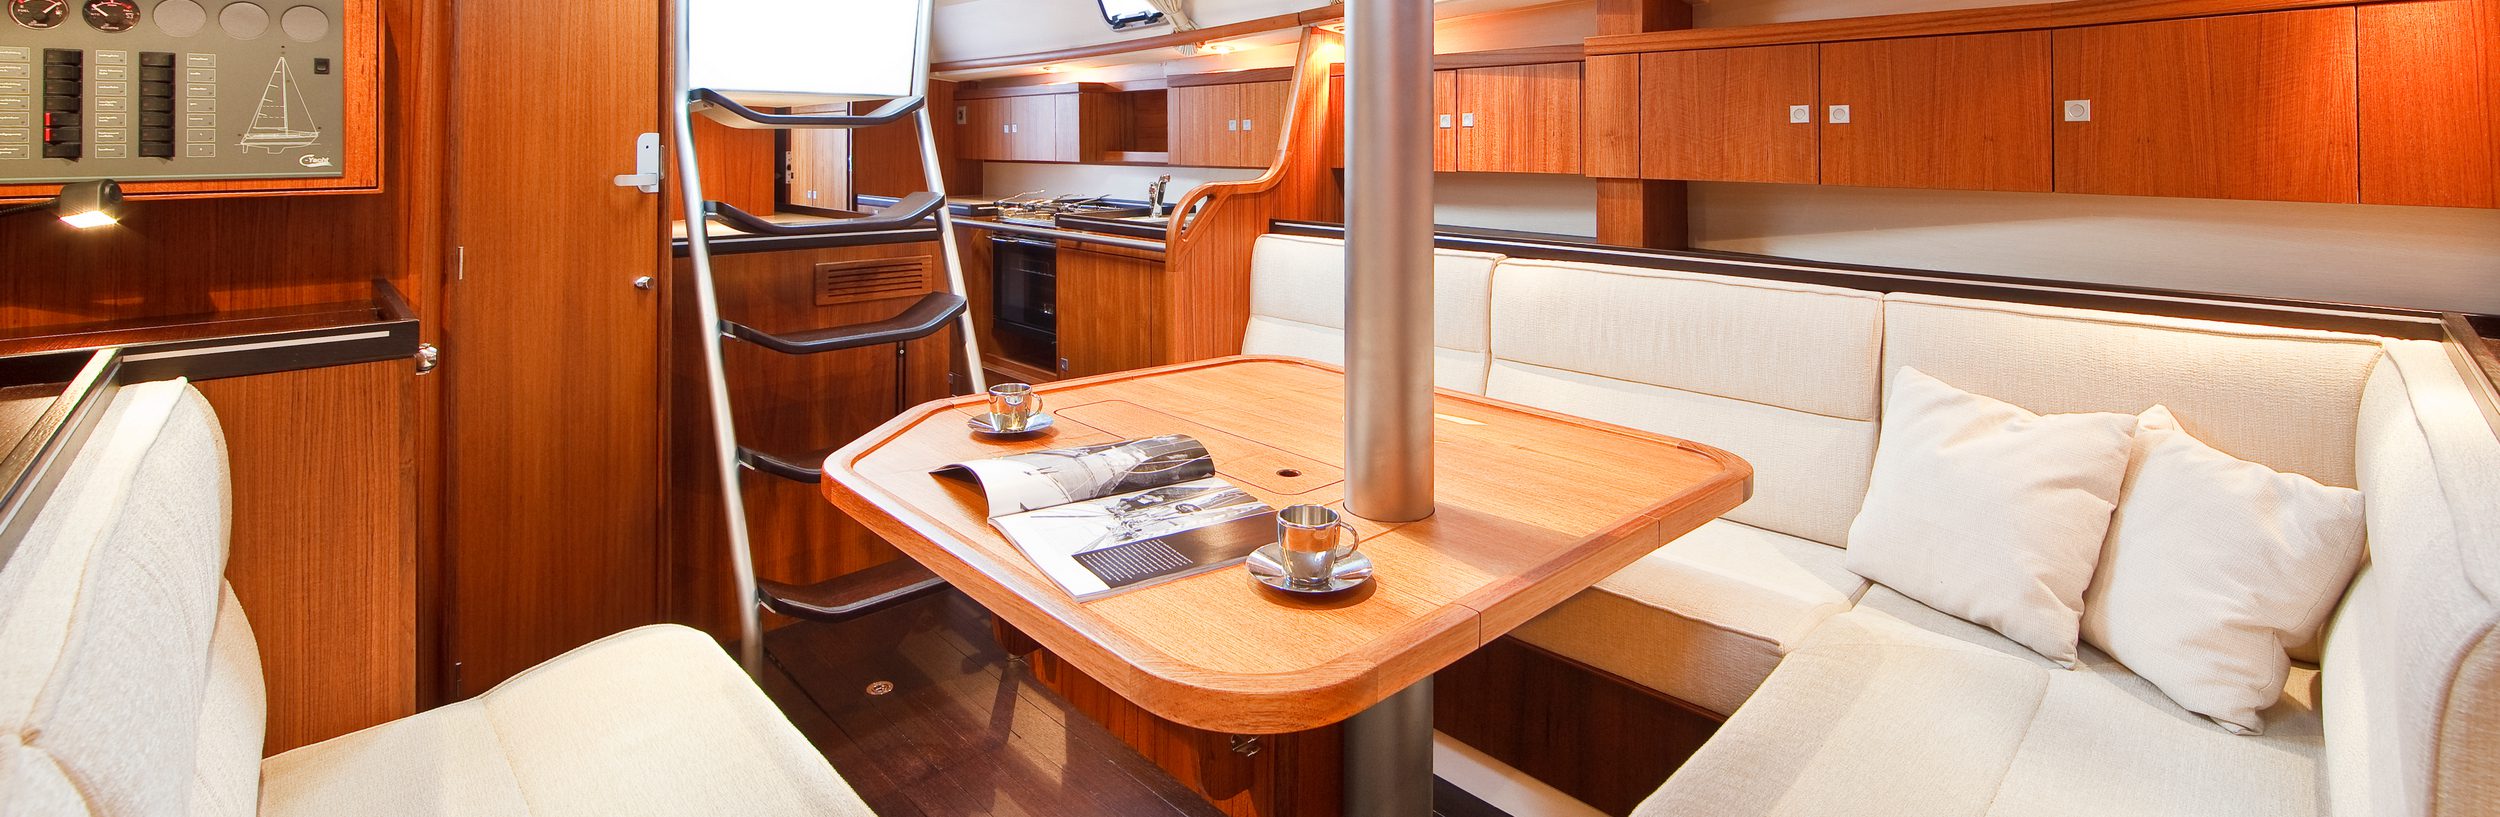 zeiljacht  interieur c-yacht 1050 club